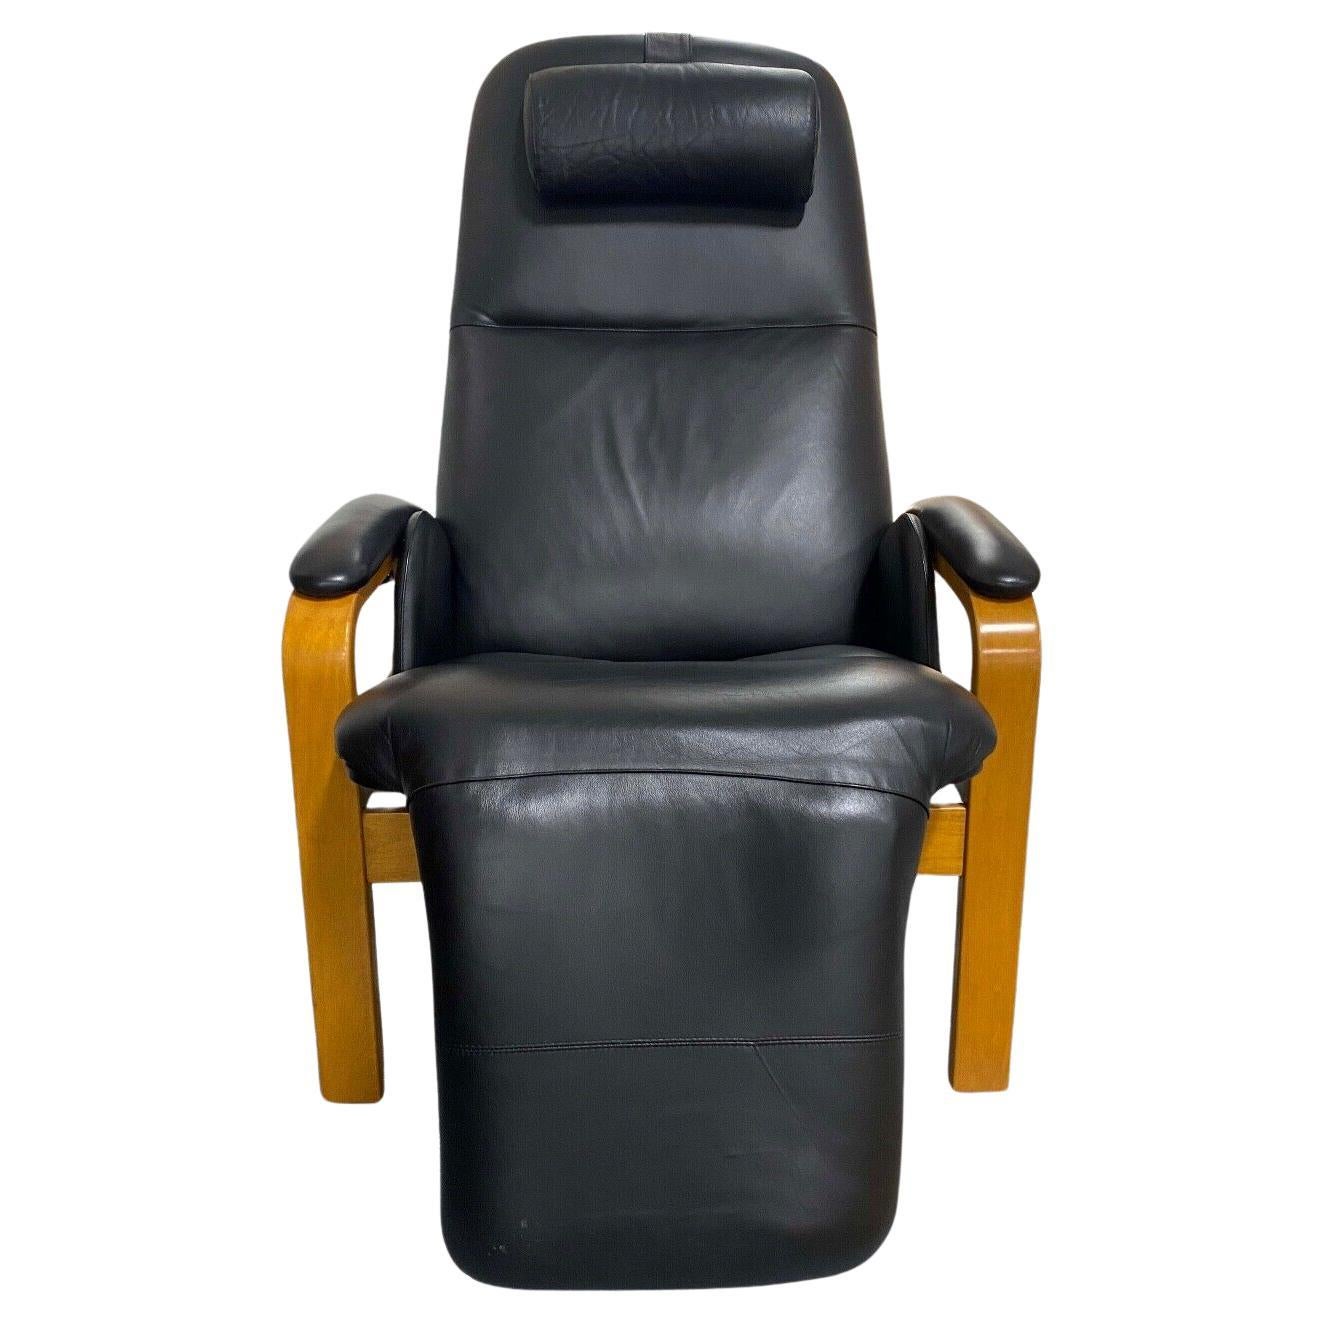 Back Saver Zero Gravity Black Leather and Wood Massage Chair Mid Century Modern